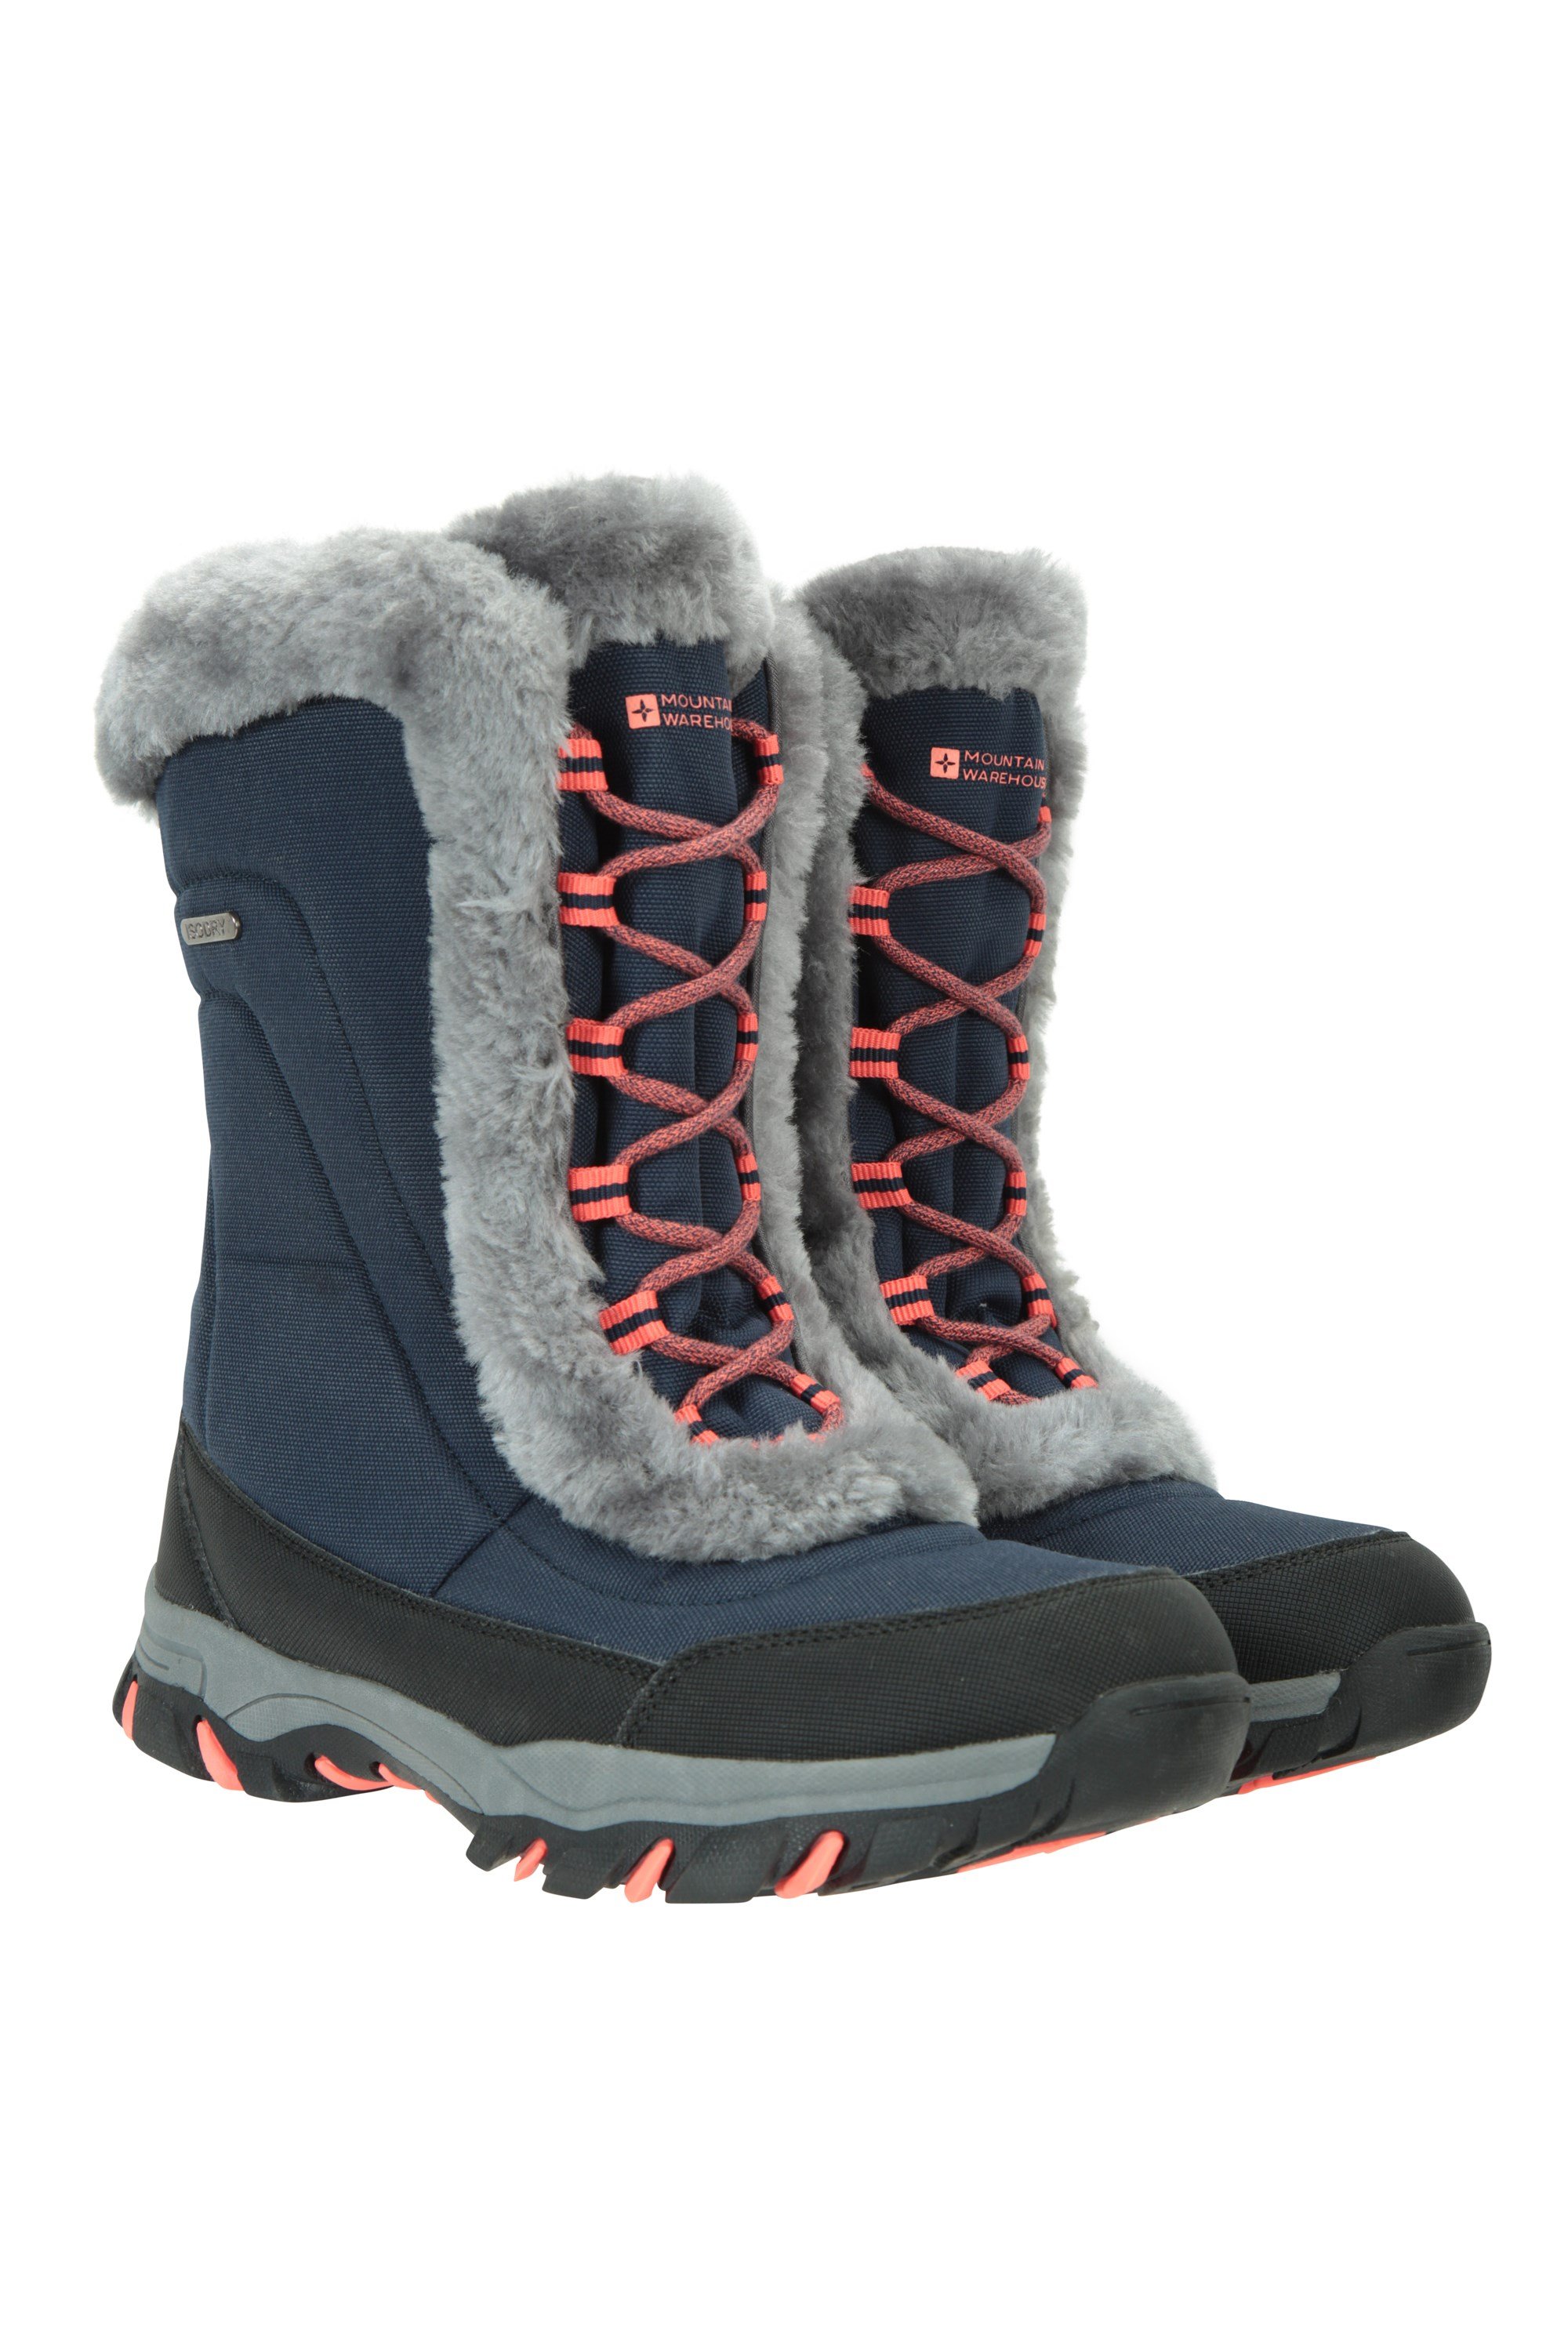 mountain warehouse ladies snow boots